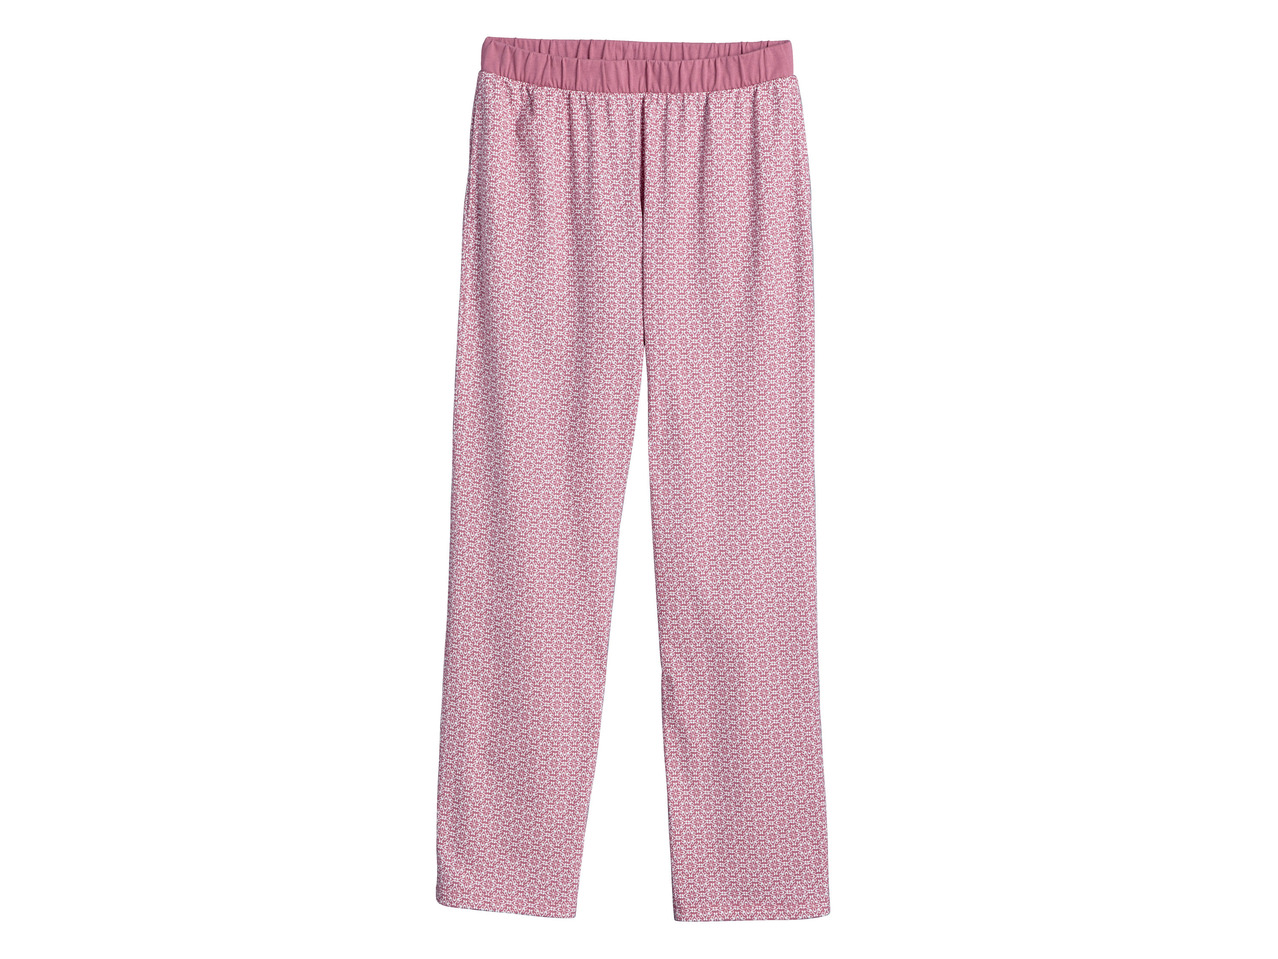 ESMARA LINGERIE/LIVERGY Ladies'/Men's Pyjamas